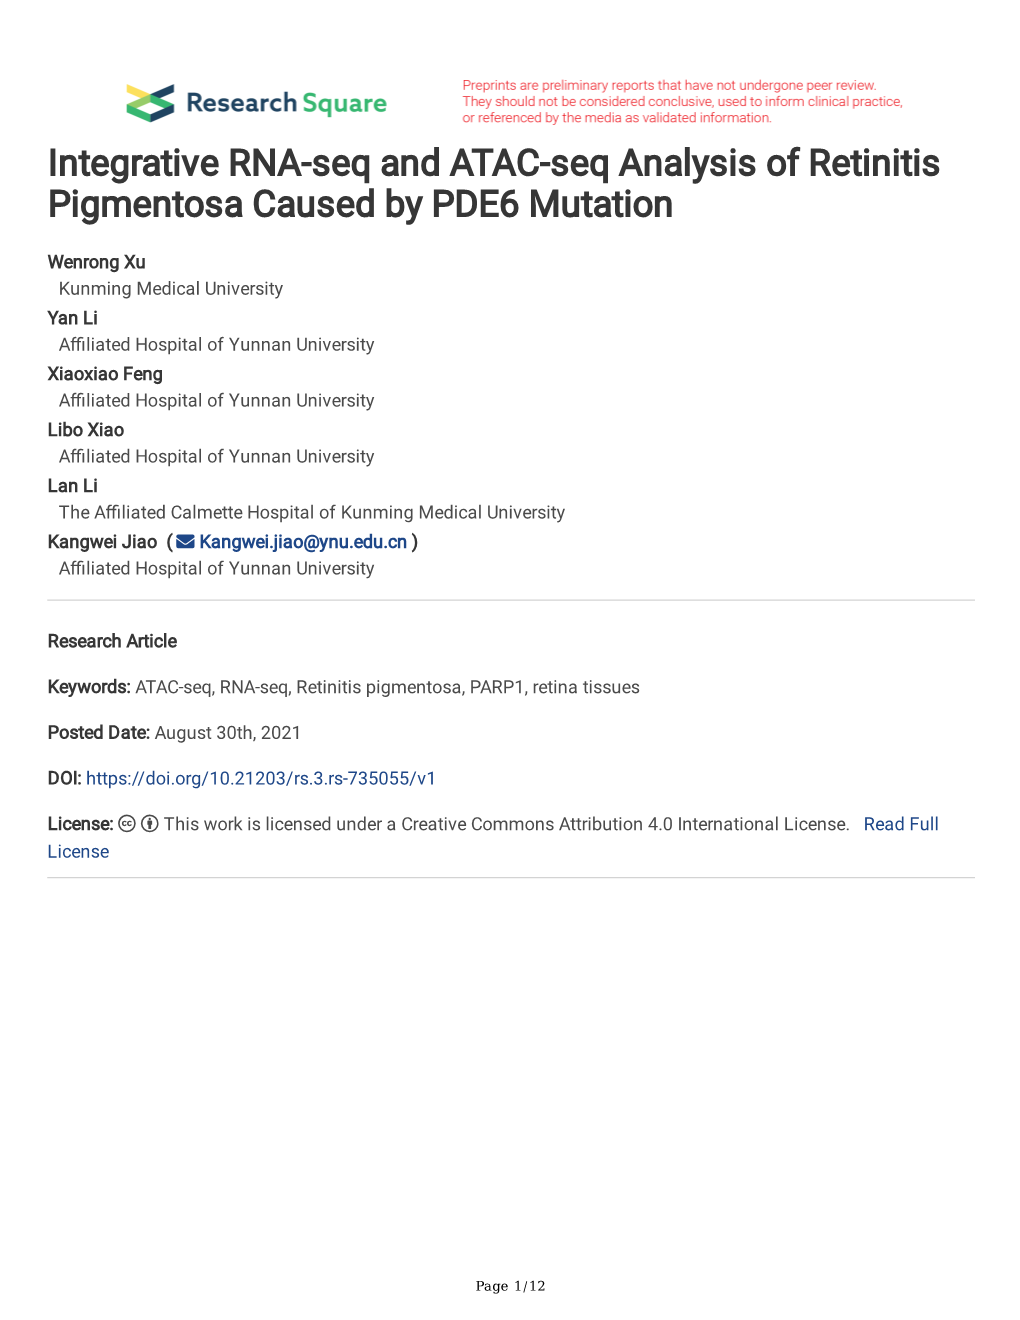 Integrative RNA-Seq and ATAC-Seq Analysis of Retinitis Pigmentosa Caused by PDE6 Mutation